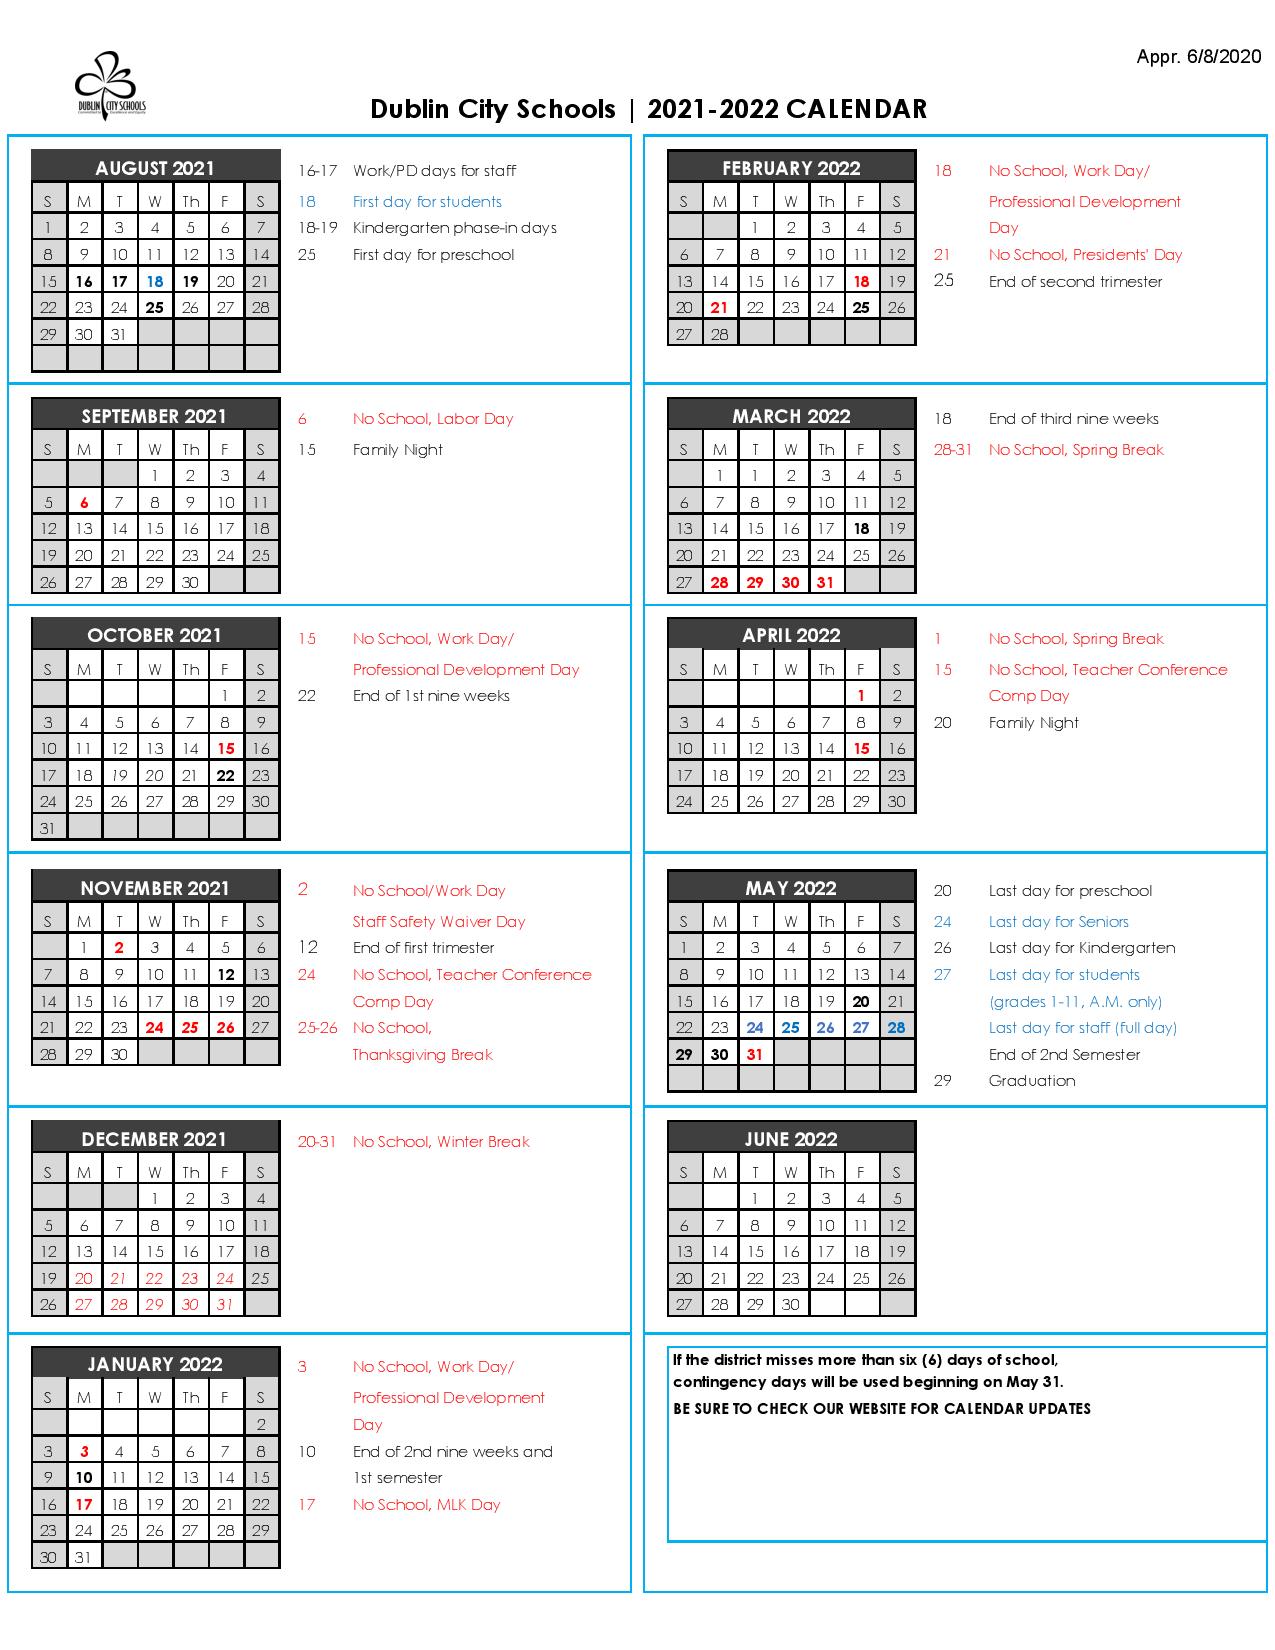 Dublin City Schools Calendar Holidays 20212022 in PDF